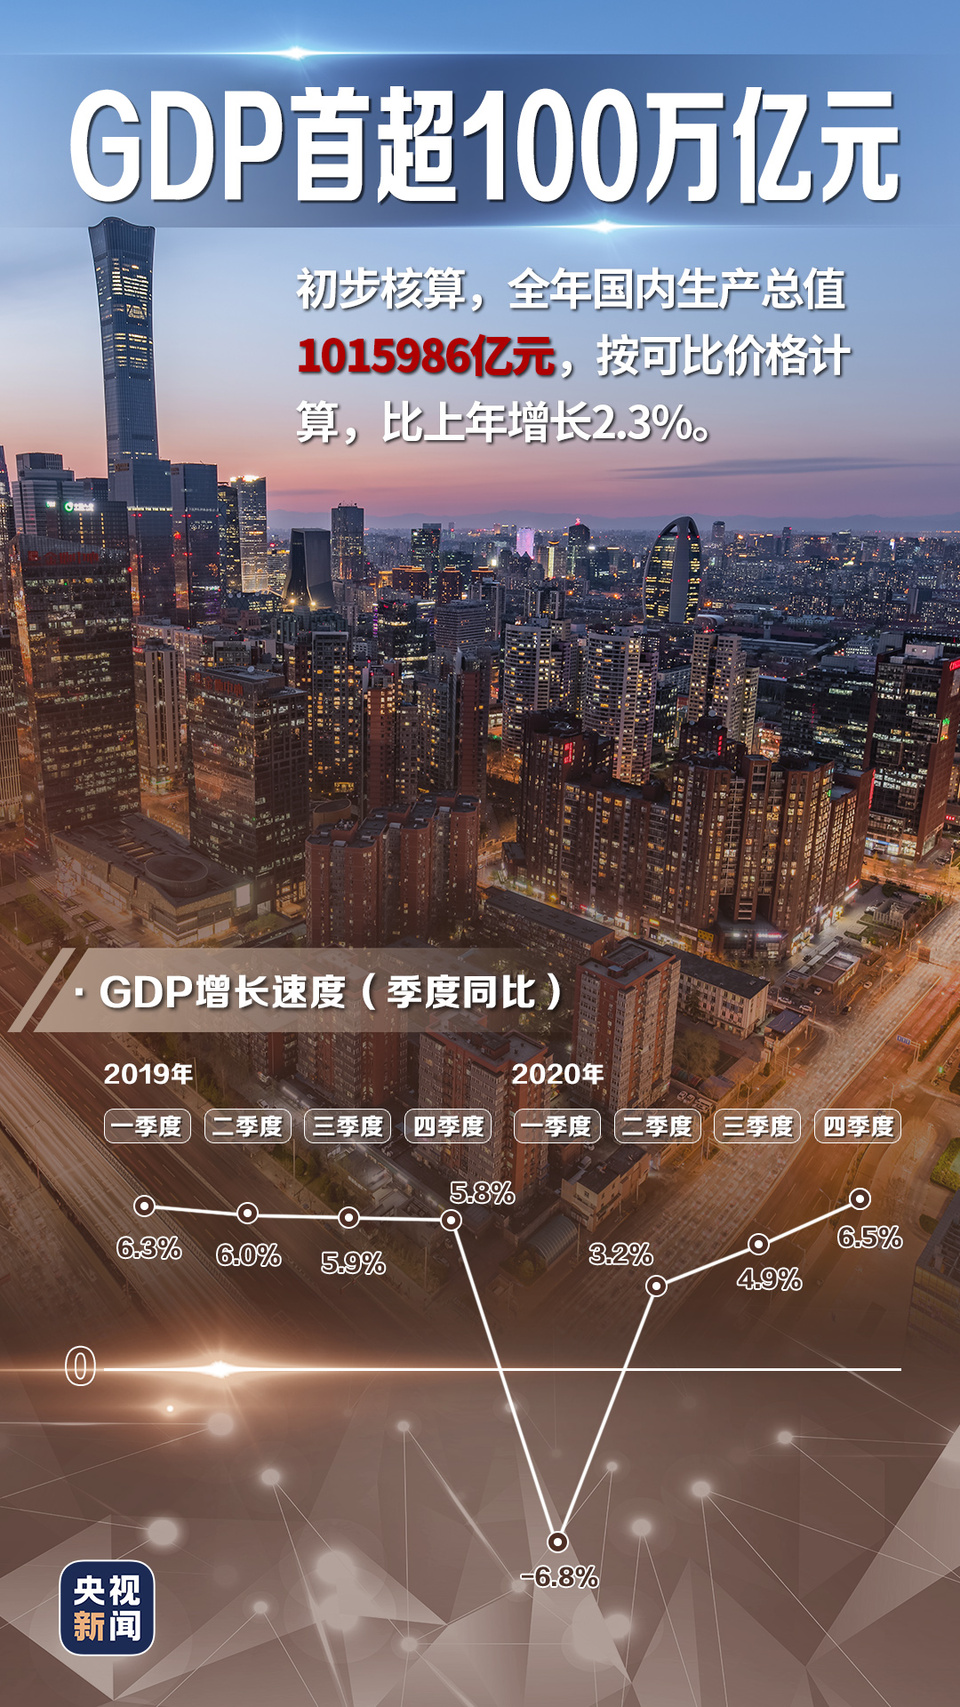 GDP首超100萬億 貿易順差3.7萬億……中國經濟成績單劃重點→